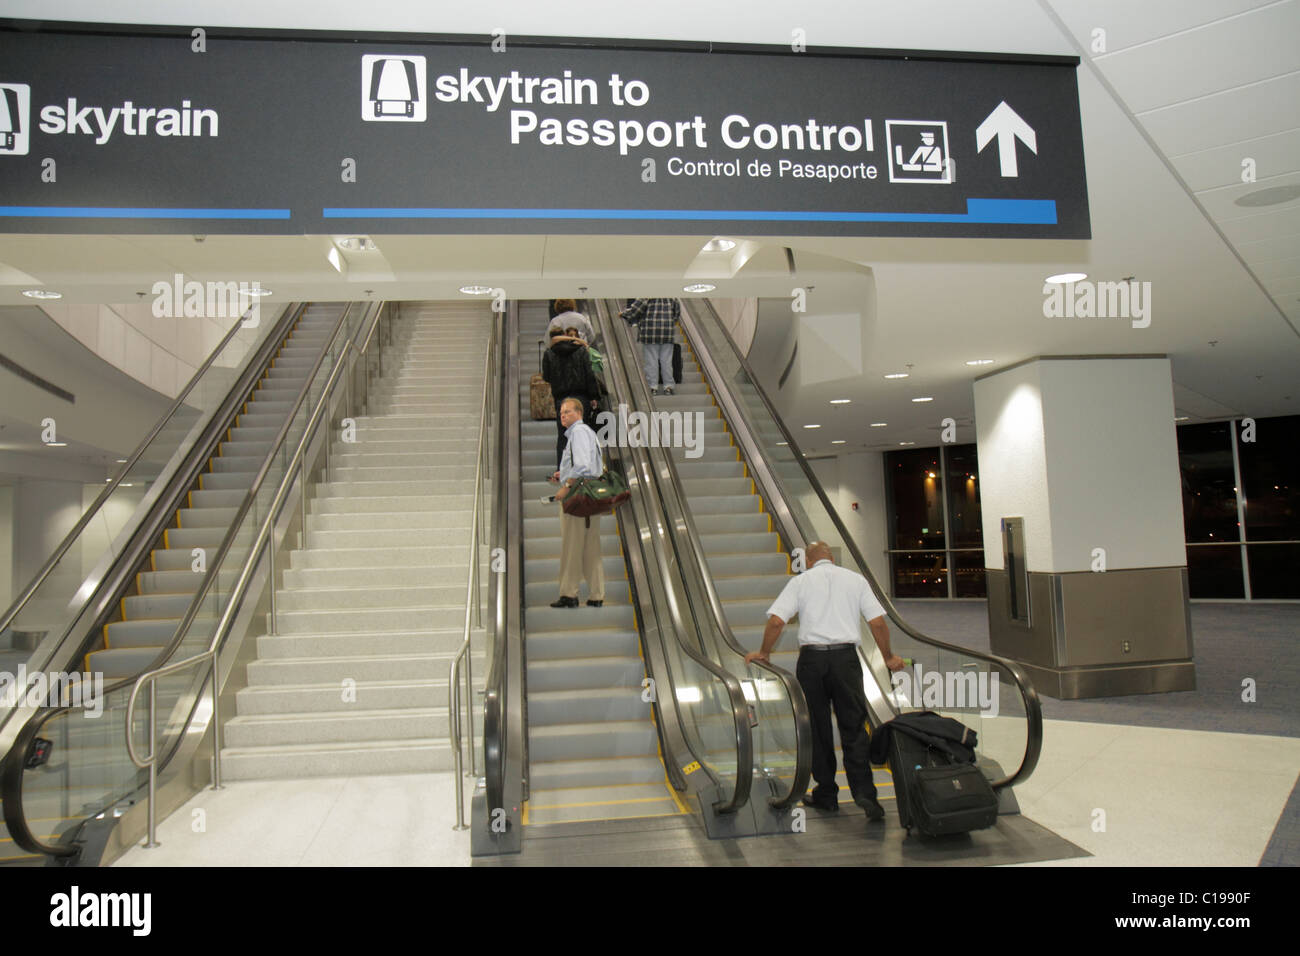 Miami Florida International Airport MIA,aviation,terminal,stairs,escalator,ascend,up,skytrain,Passport Control,international flight,bilingual,English, Stock Photo